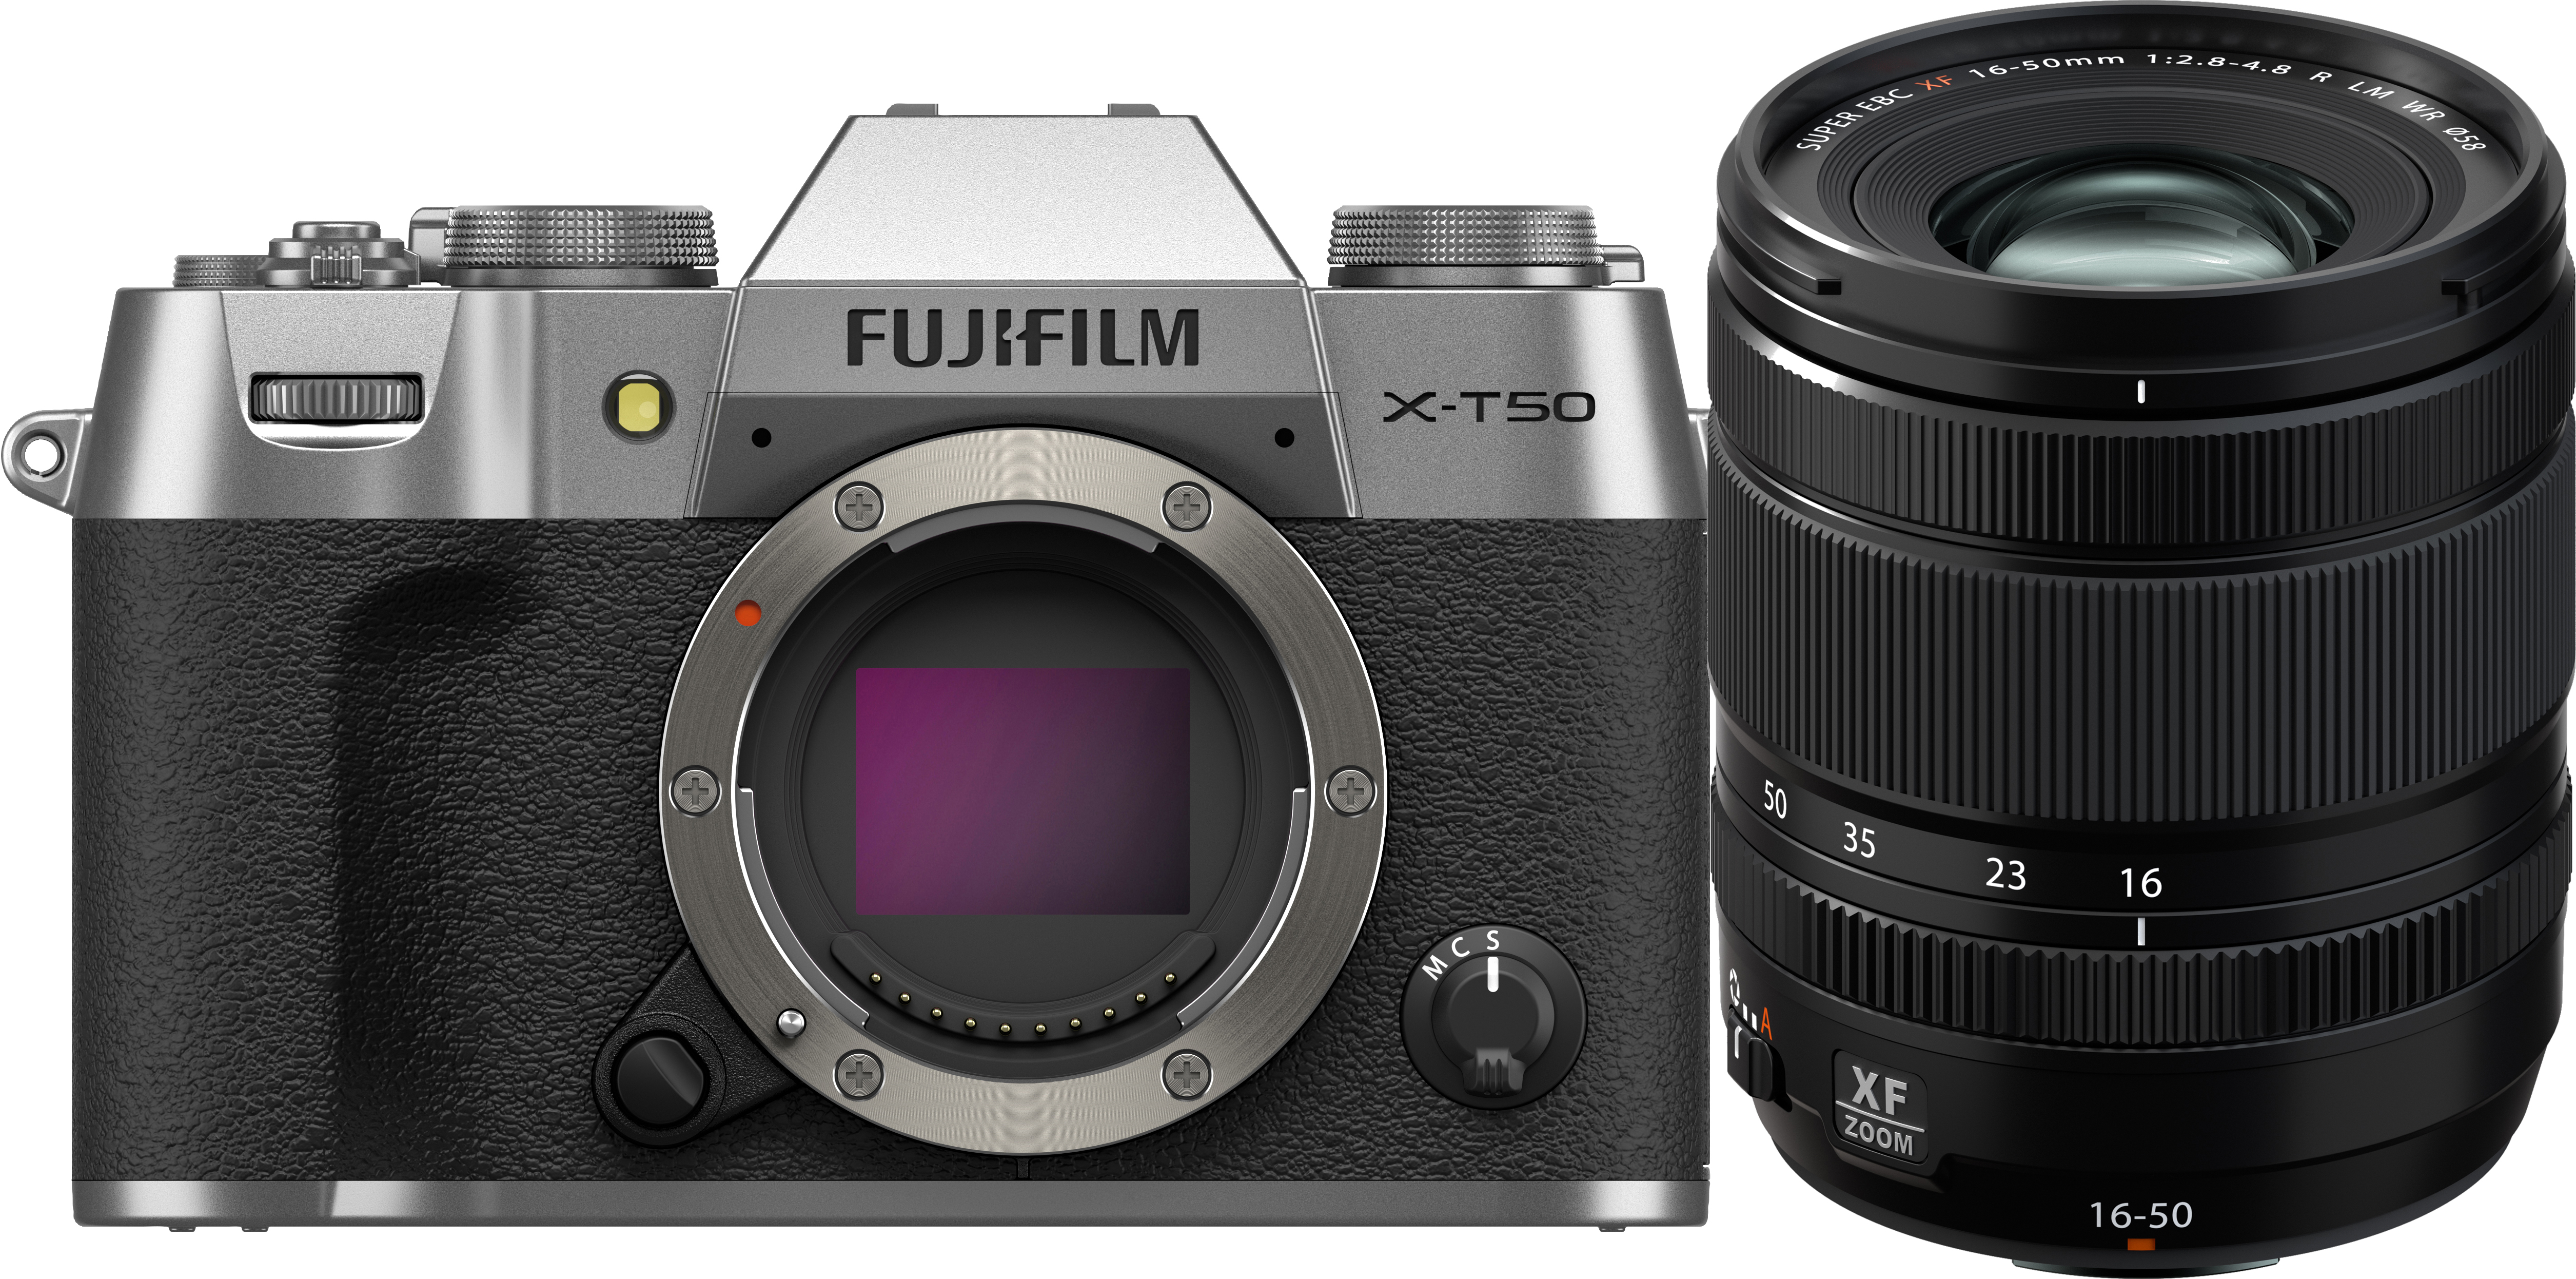 Fujifilm X-T50 Mirrorless Camera with XF 16-50mm f/2.8-4.8 Lens (Silver)